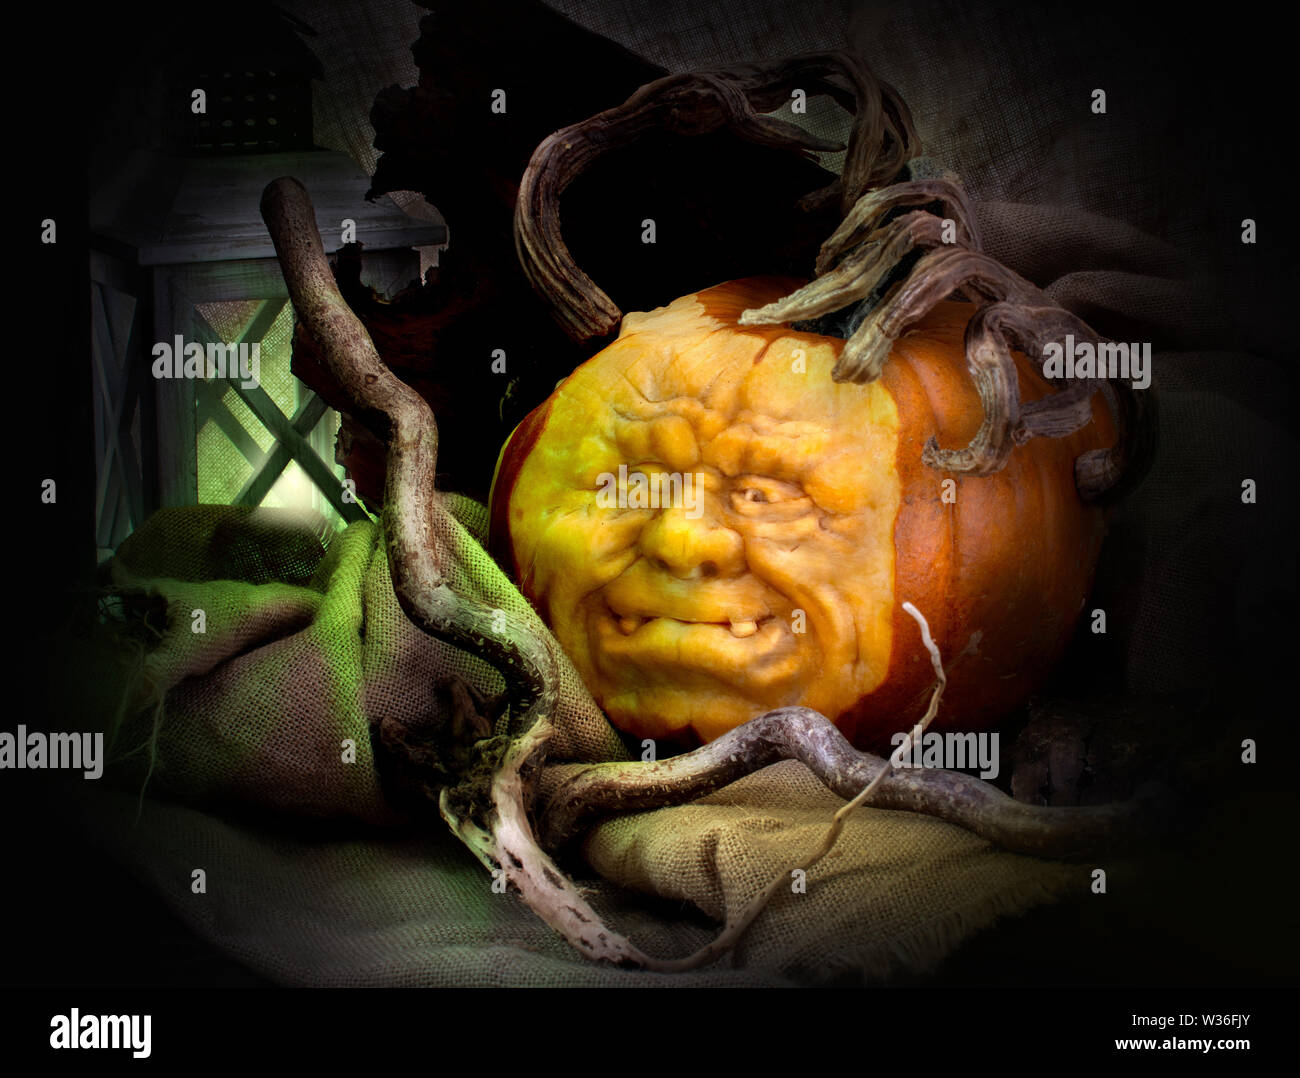 food art melons pumpkin and vegetables carving by culinary artist angkana neumayer of austria Stock Photo